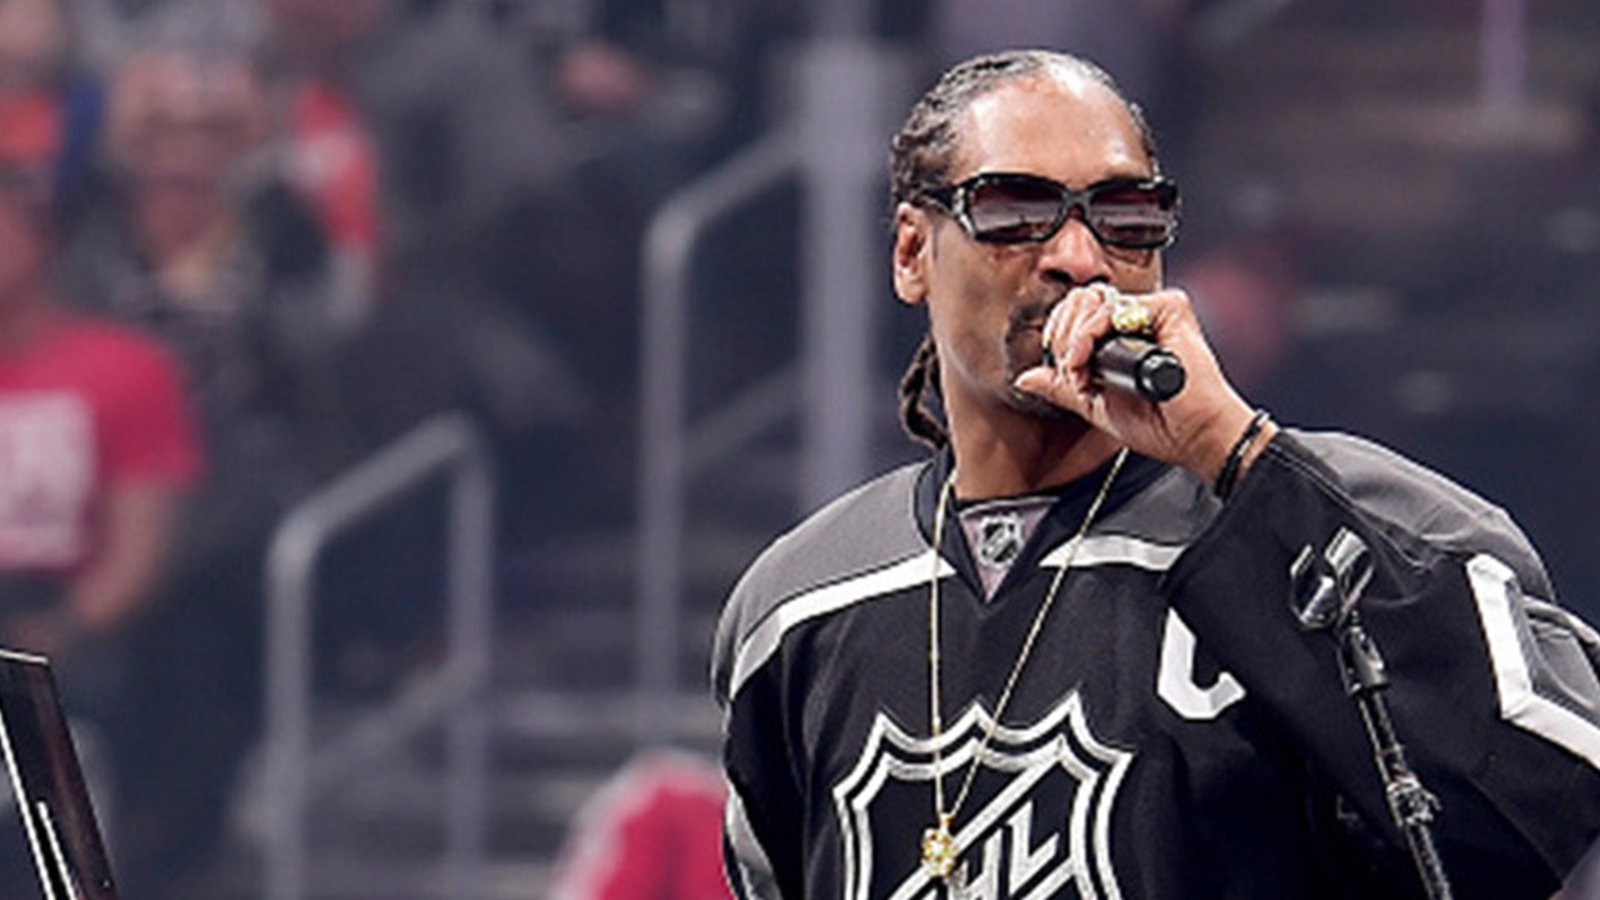 Rapper Snoop Dogg facing legal battle against Maple Leafs